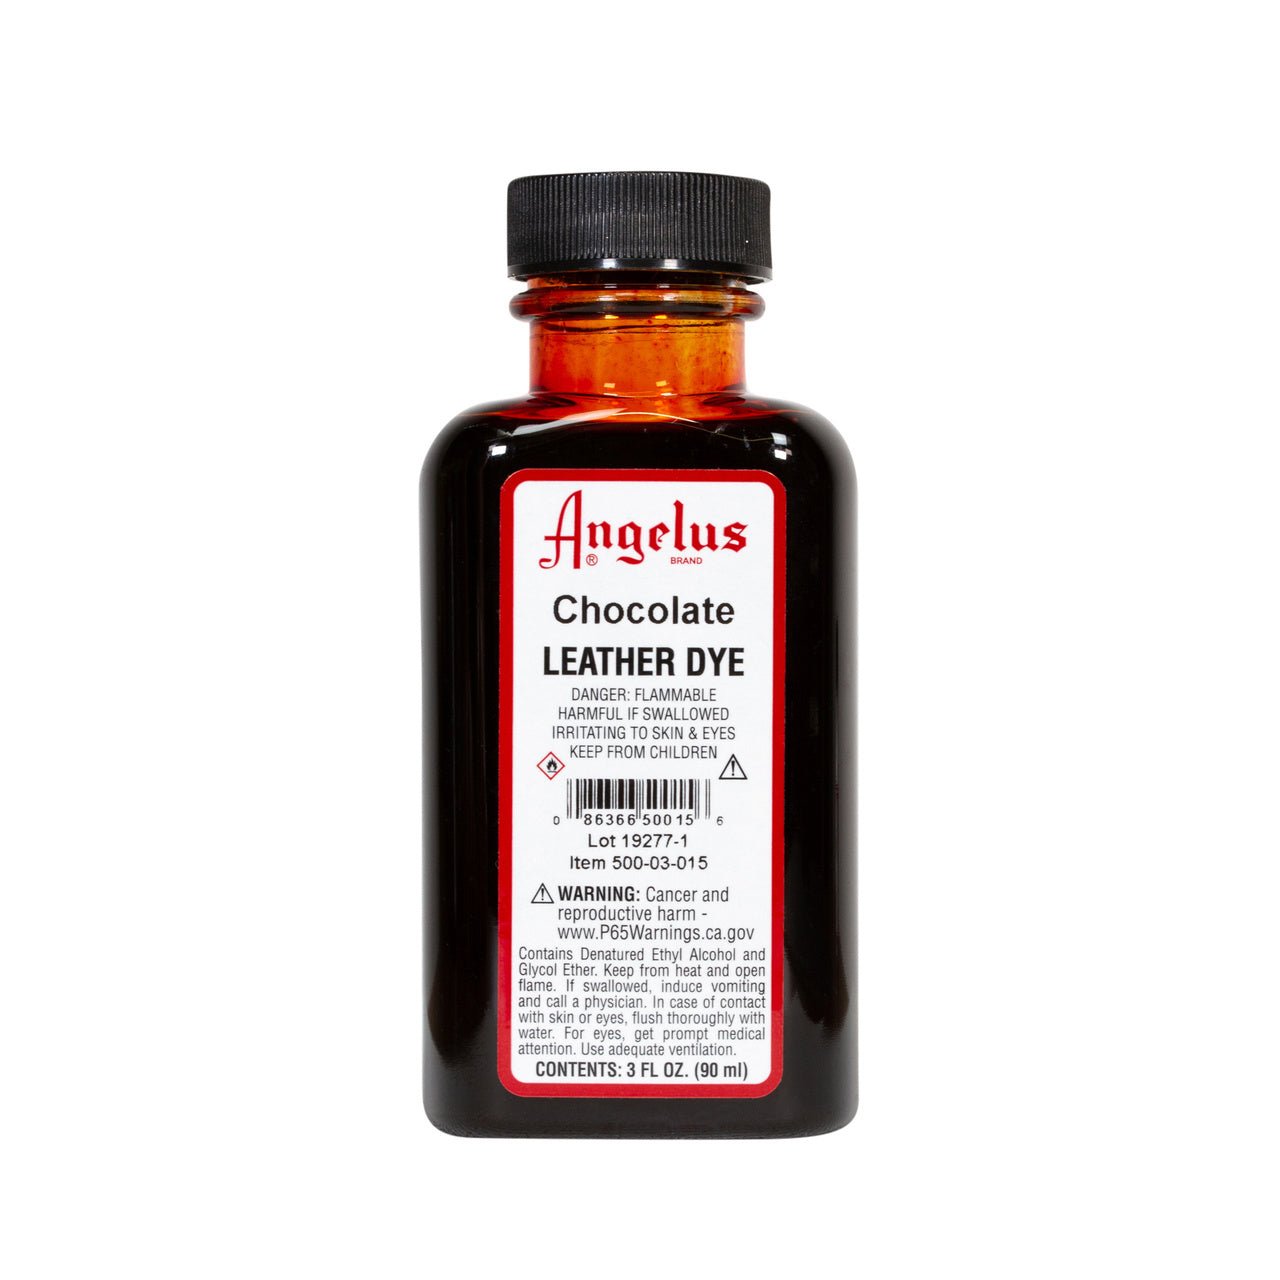 Angelus Leather Dye 3 fl oz (88.7 ml) - Chocolate - merriartist.com